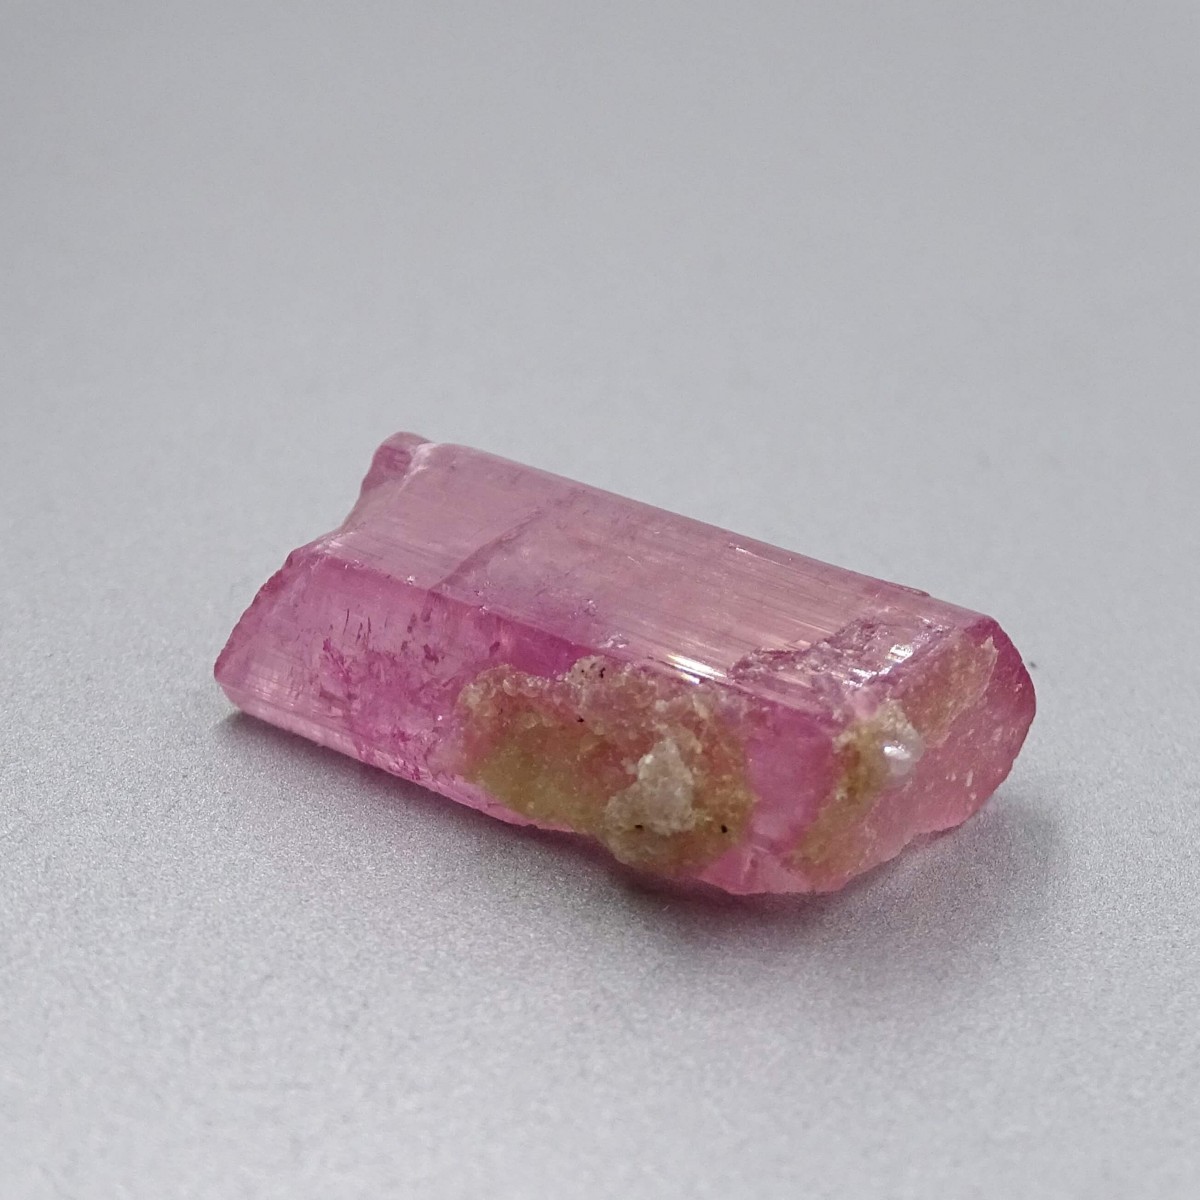 Tourmaline pink natural crystal 10.2g, Afghanistan